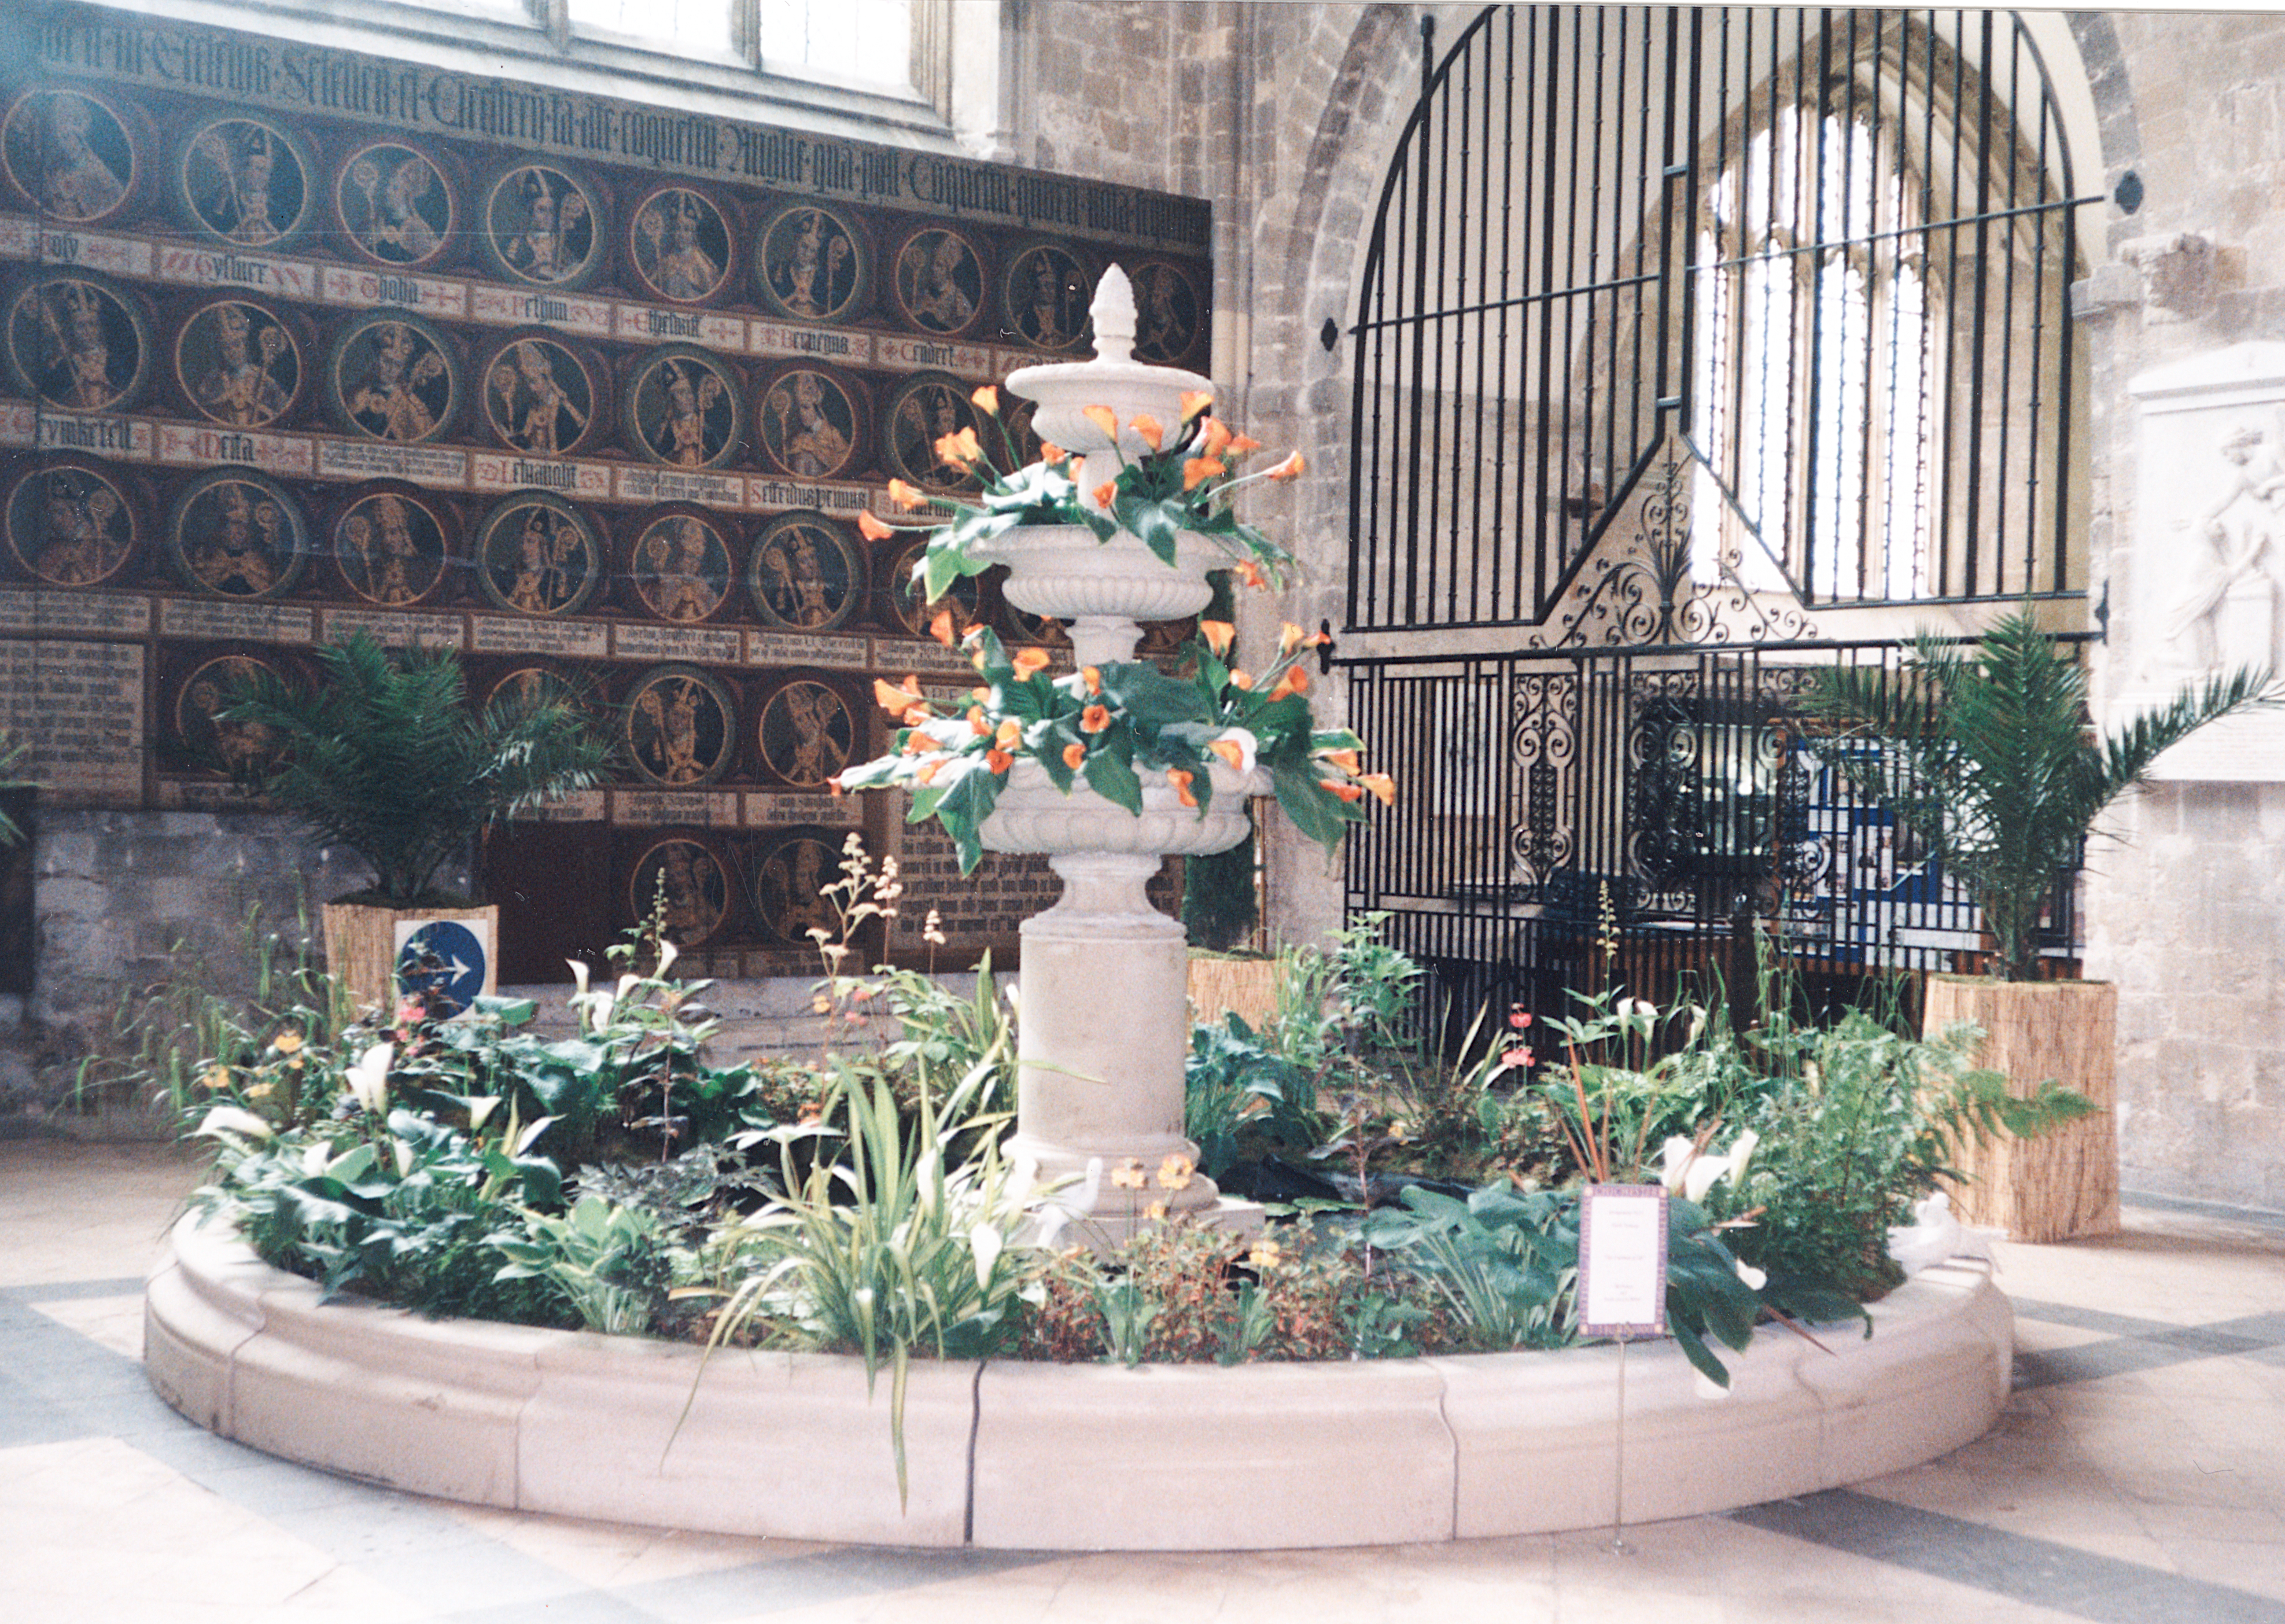 North Transept, 2000